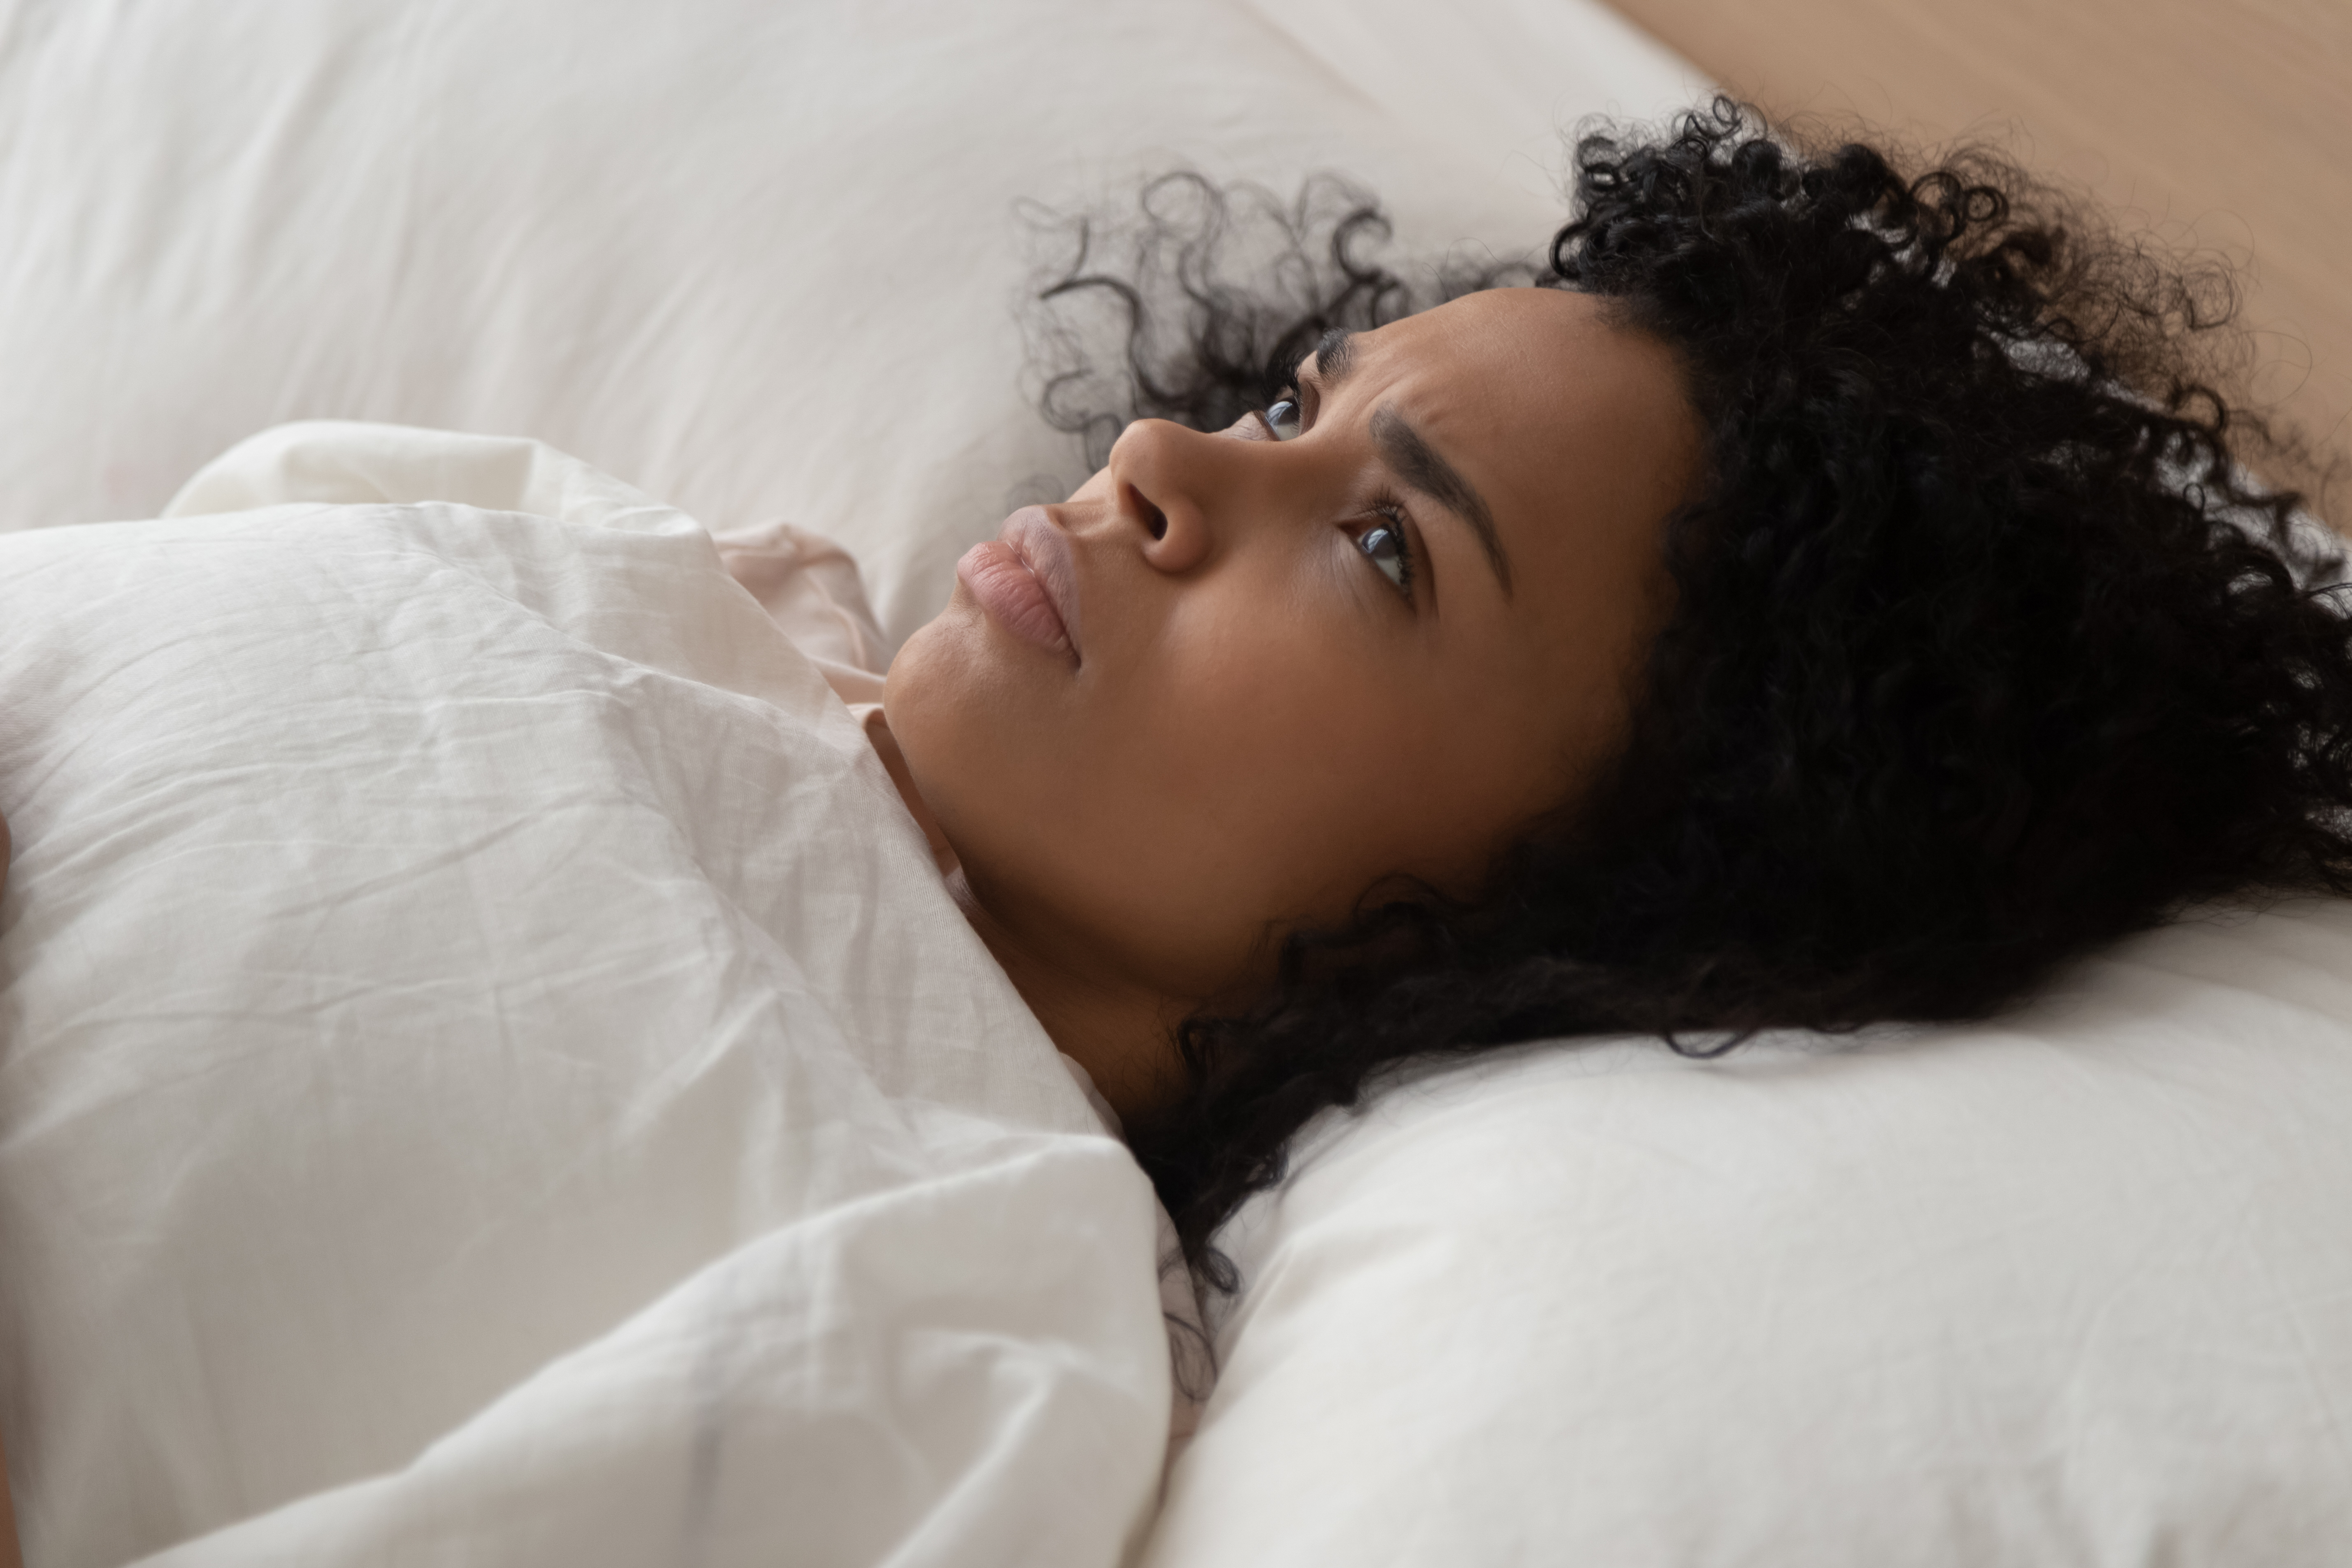 A black woman having trouble falling asleep | Source: Shutterstock